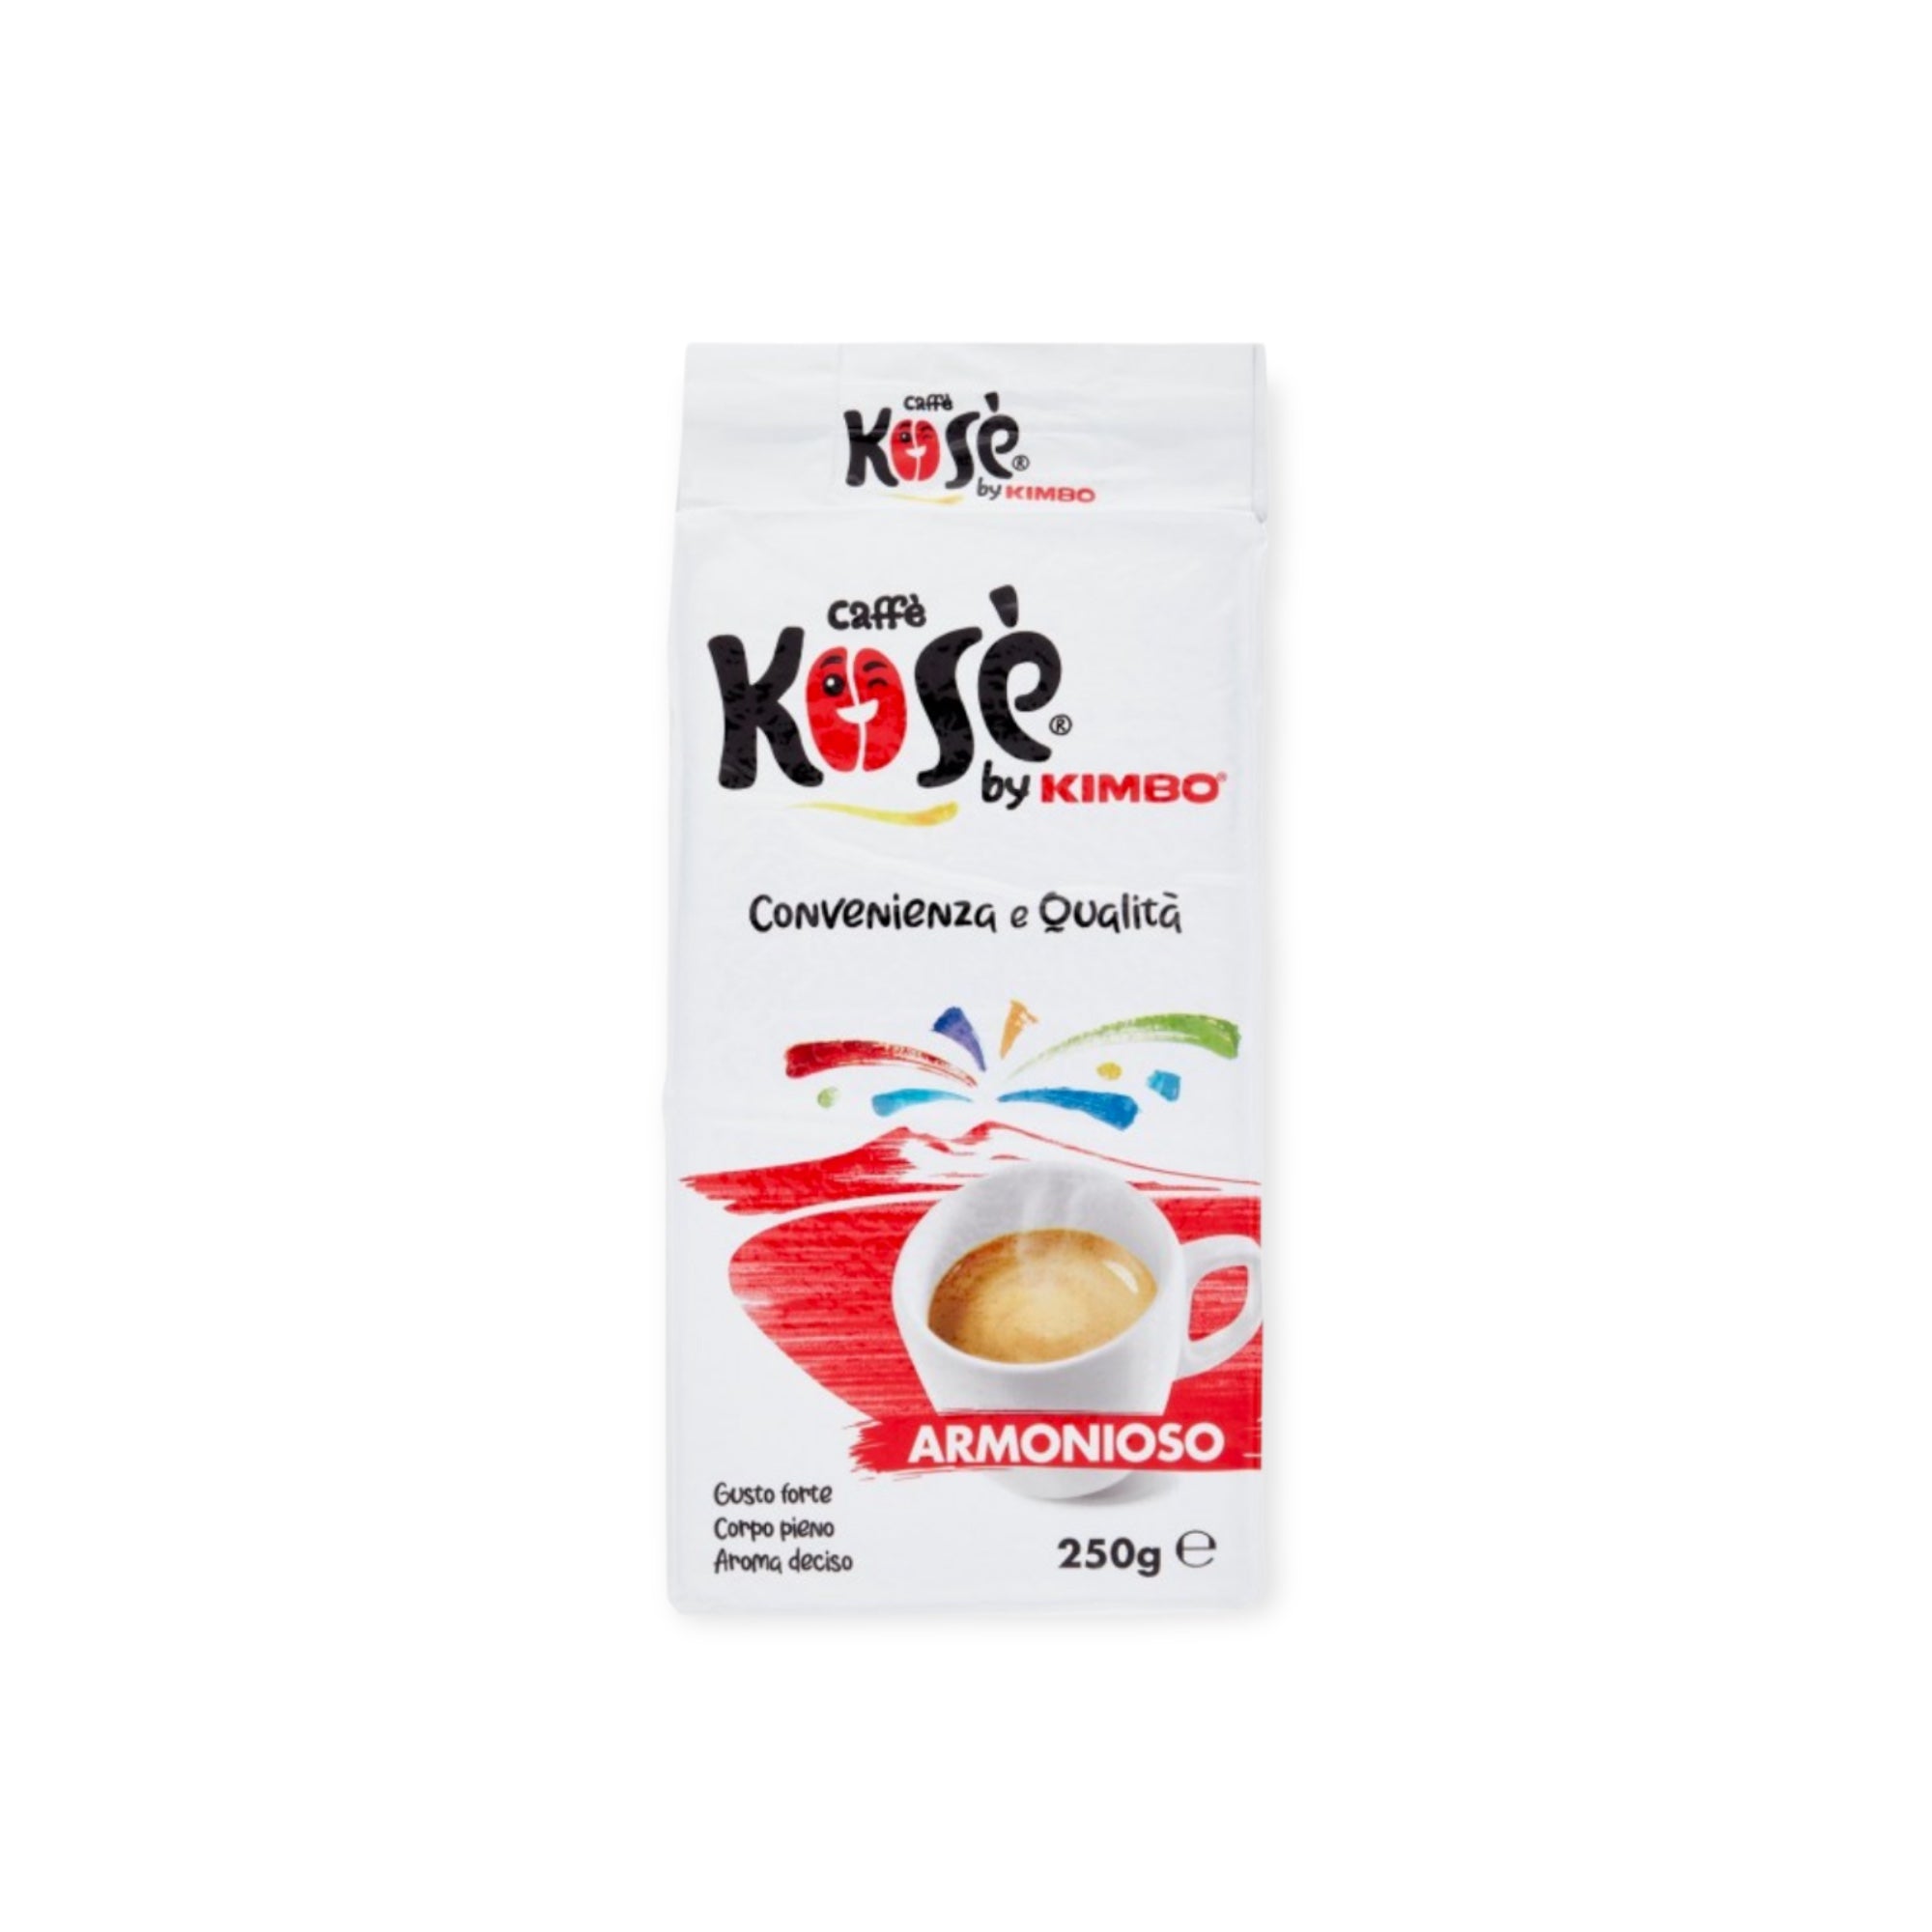 Kosè Coffee Armonioso 250gr. By Kimbo – Made In Eatalia